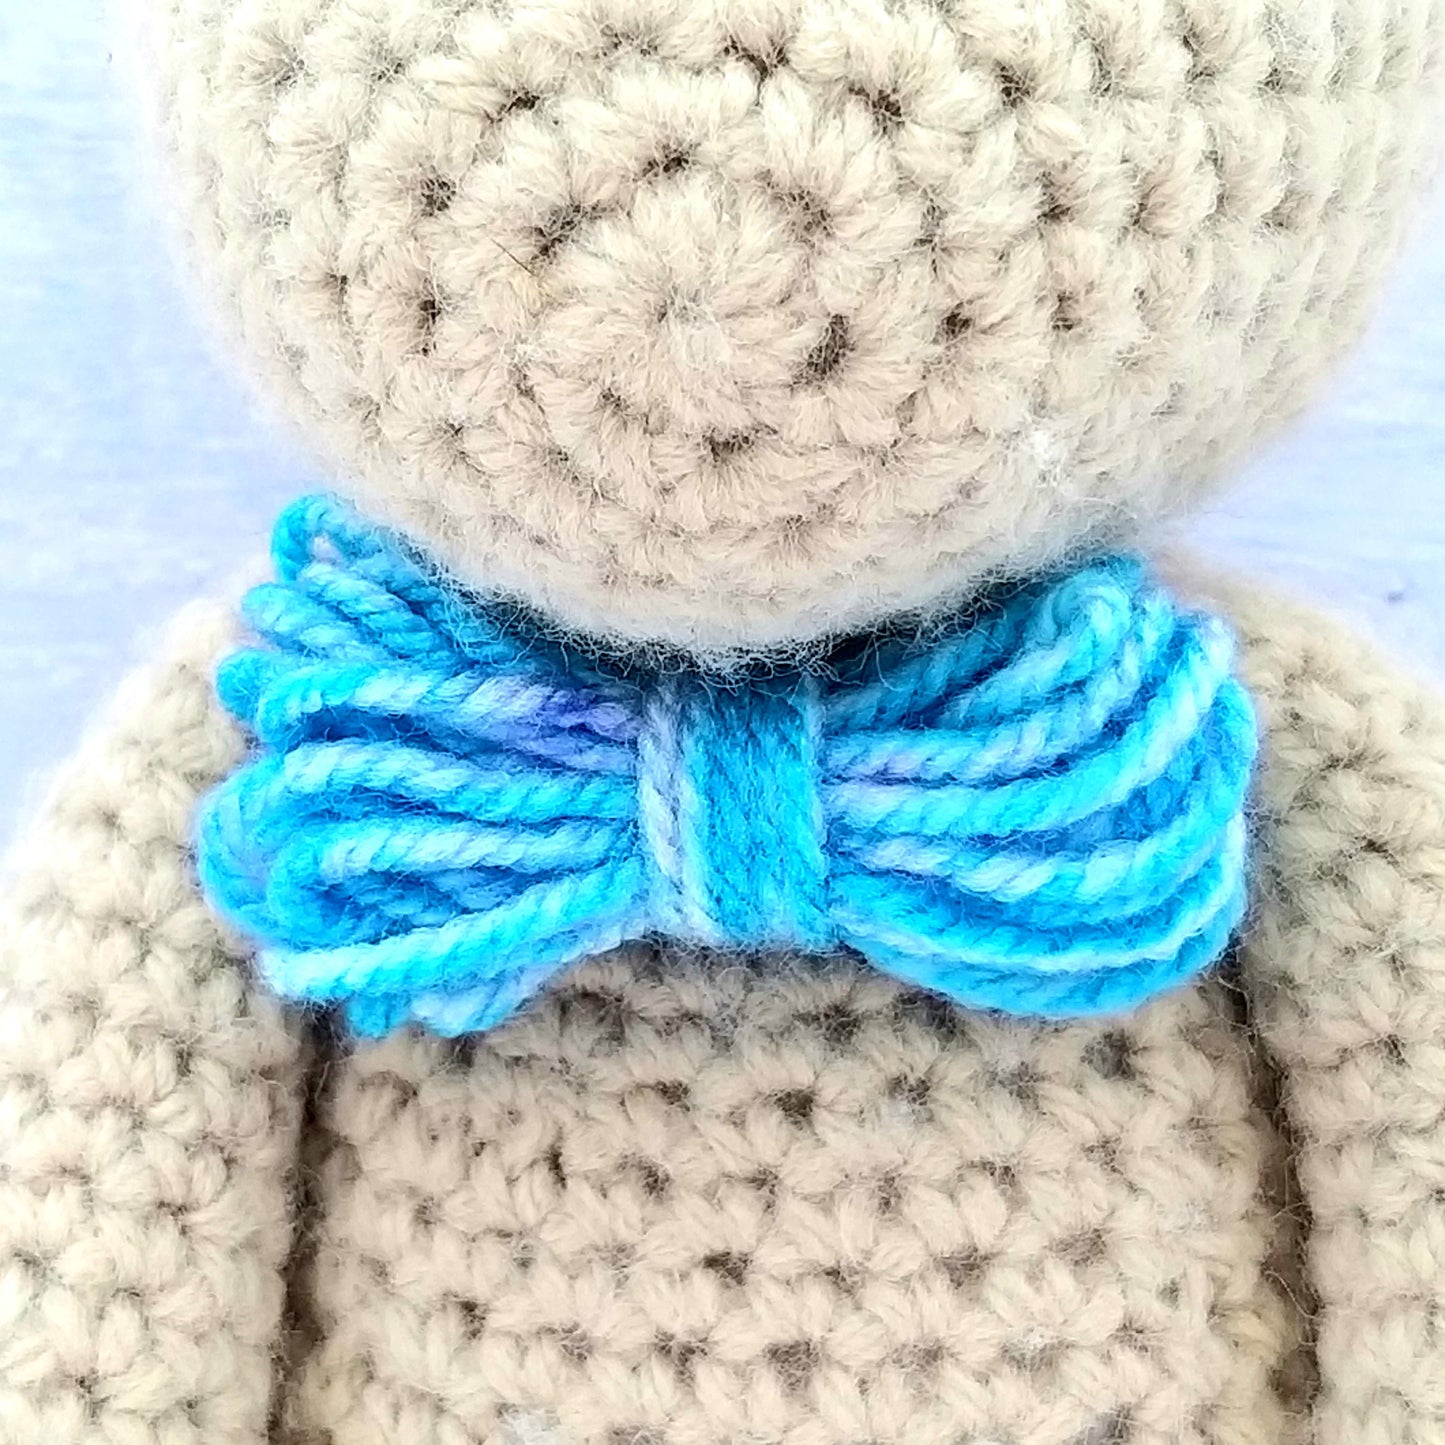 Crochet Bow Tie